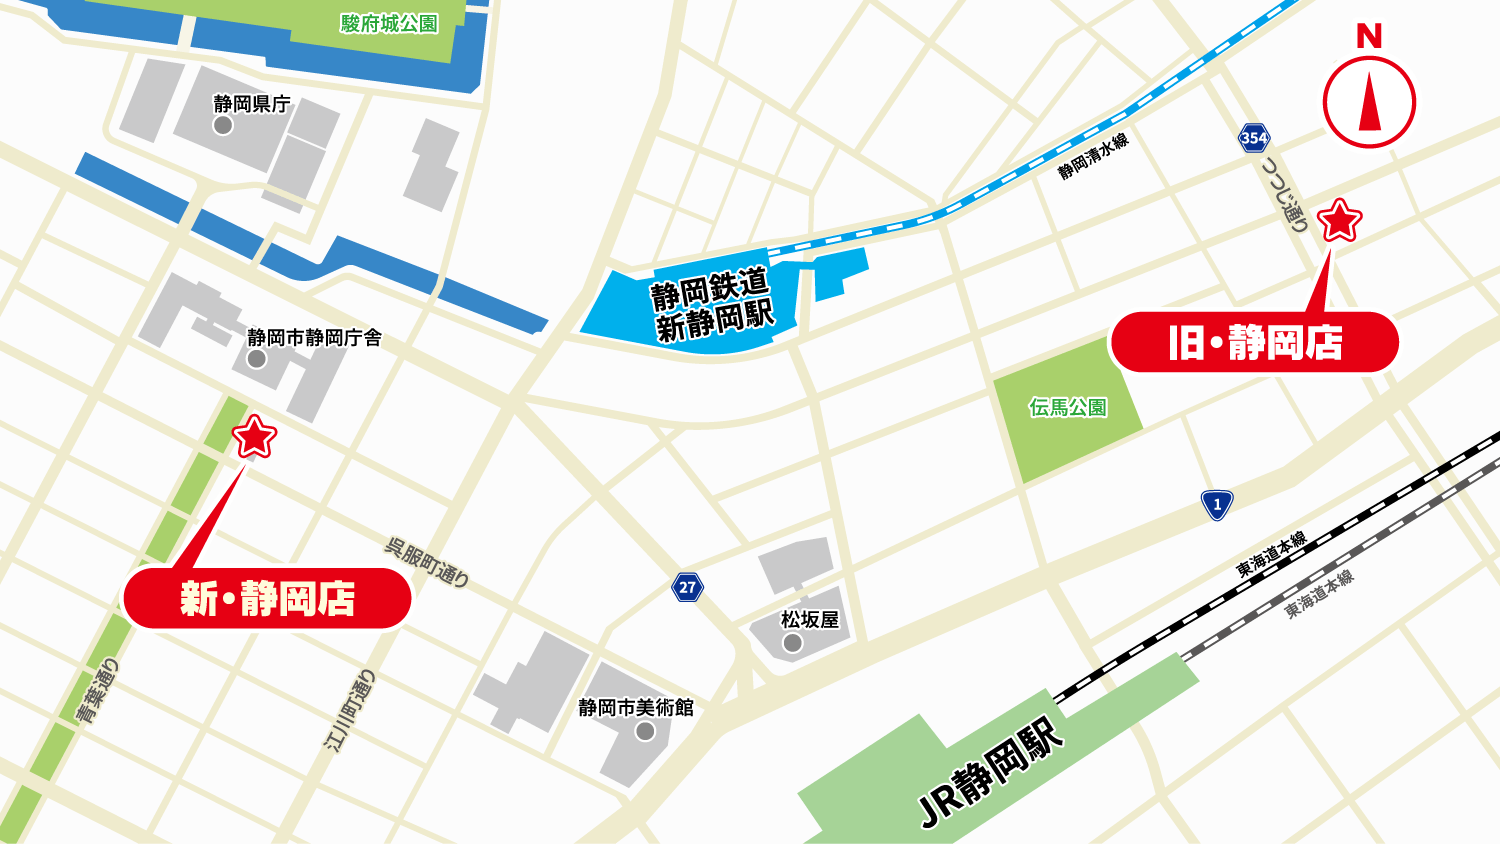 JR静岡駅北側、葵タワー脇から呉服町通りを抜け、葵スクエアのすぐ横に店舗があります。